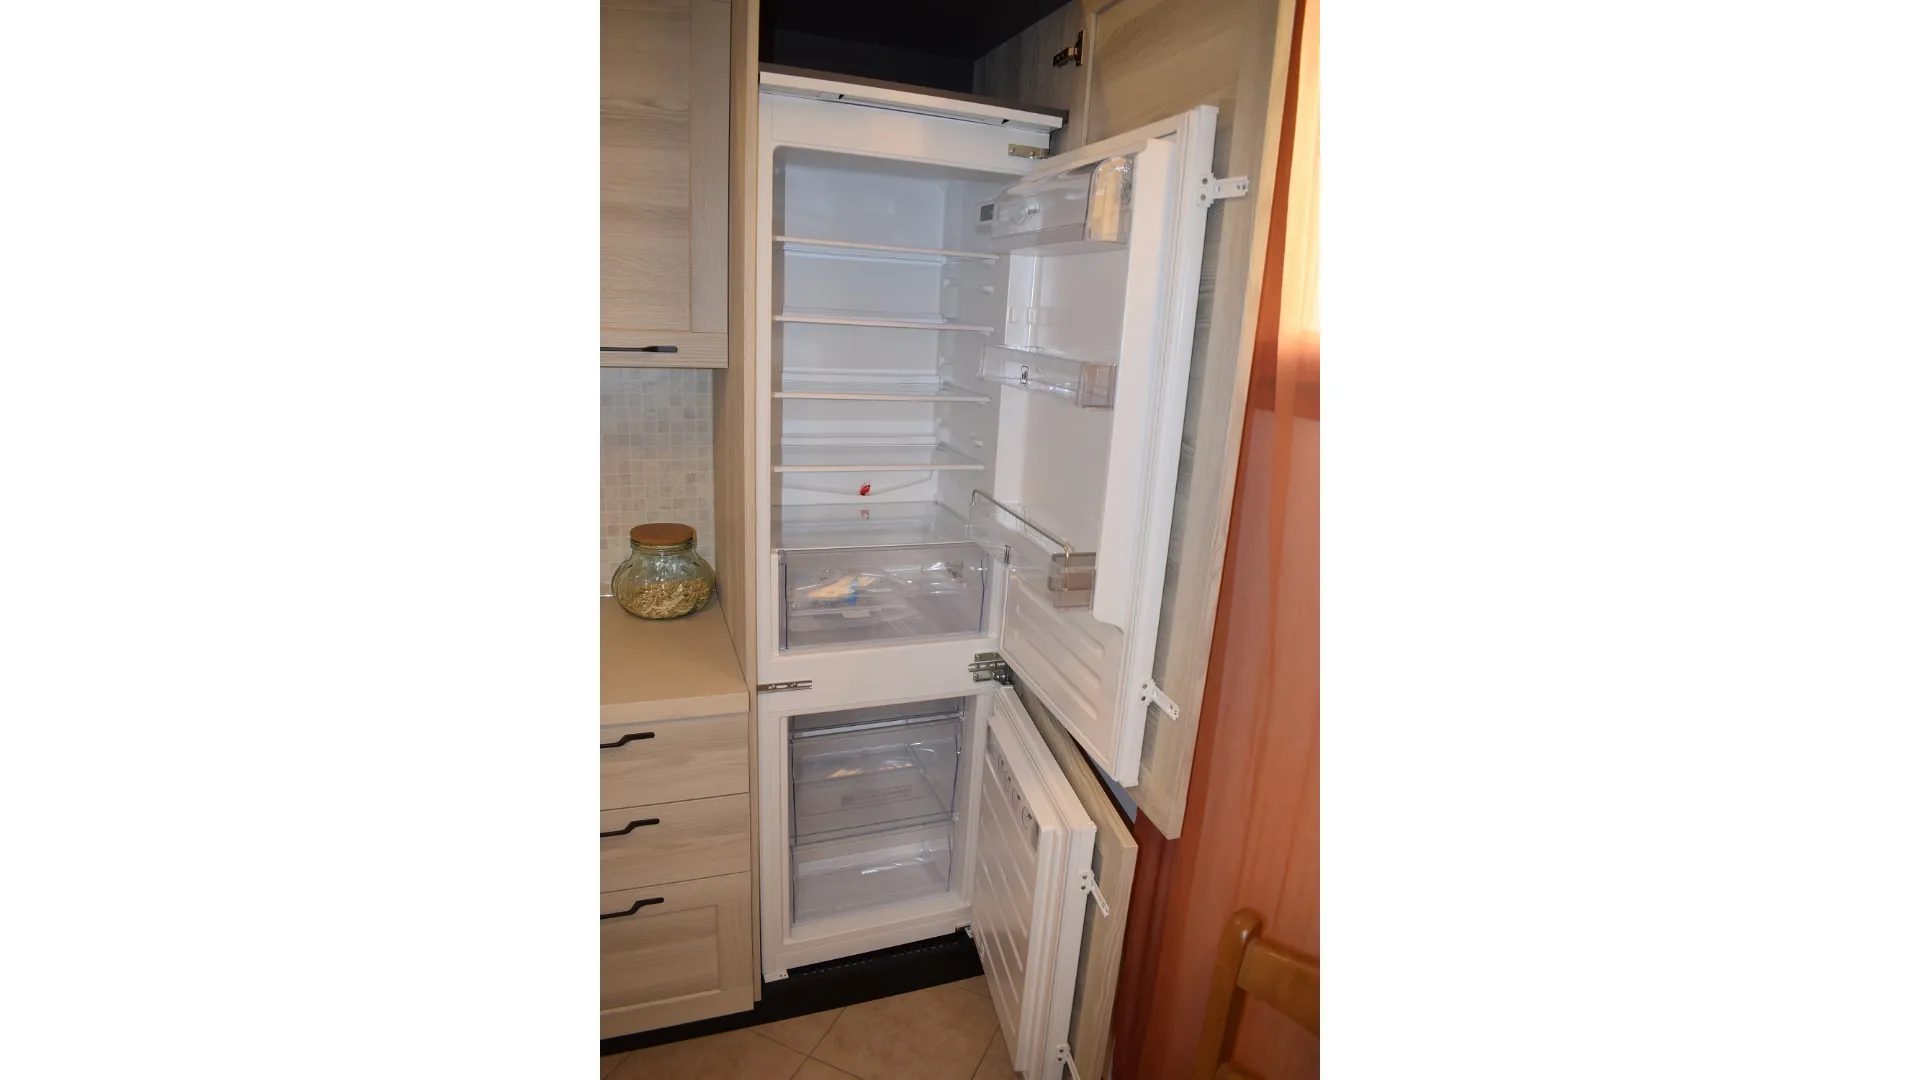 Built-in fridge with large freezer